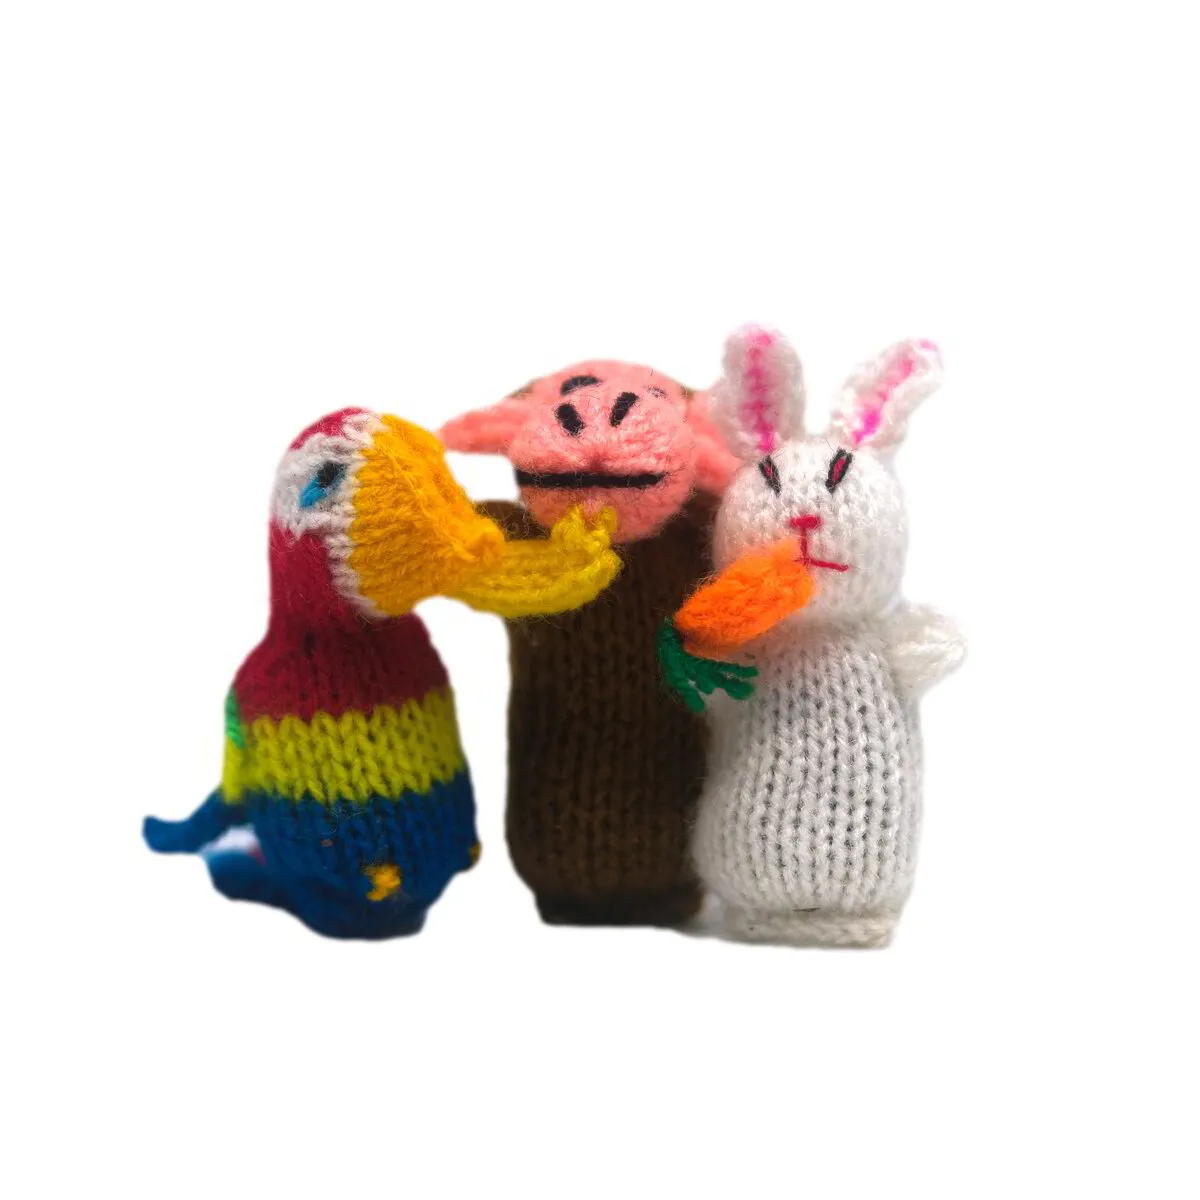 Small Knit Animals Stuffed with Organic Catnip